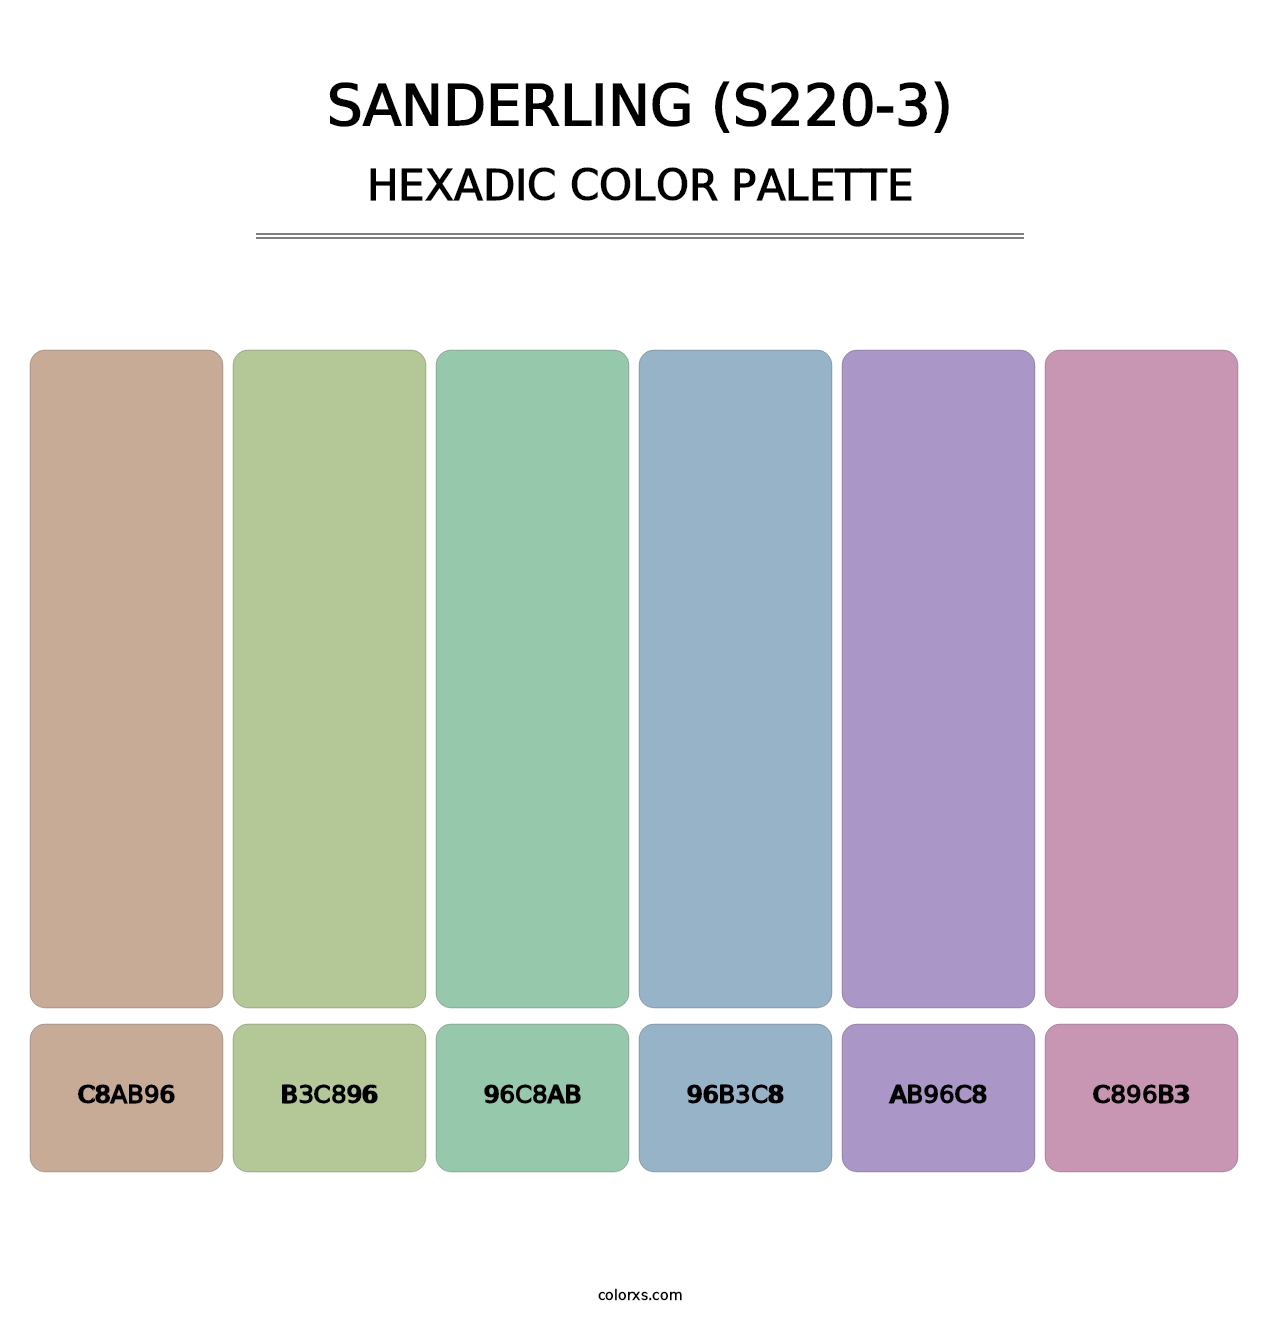 Sanderling (S220-3) - Hexadic Color Palette